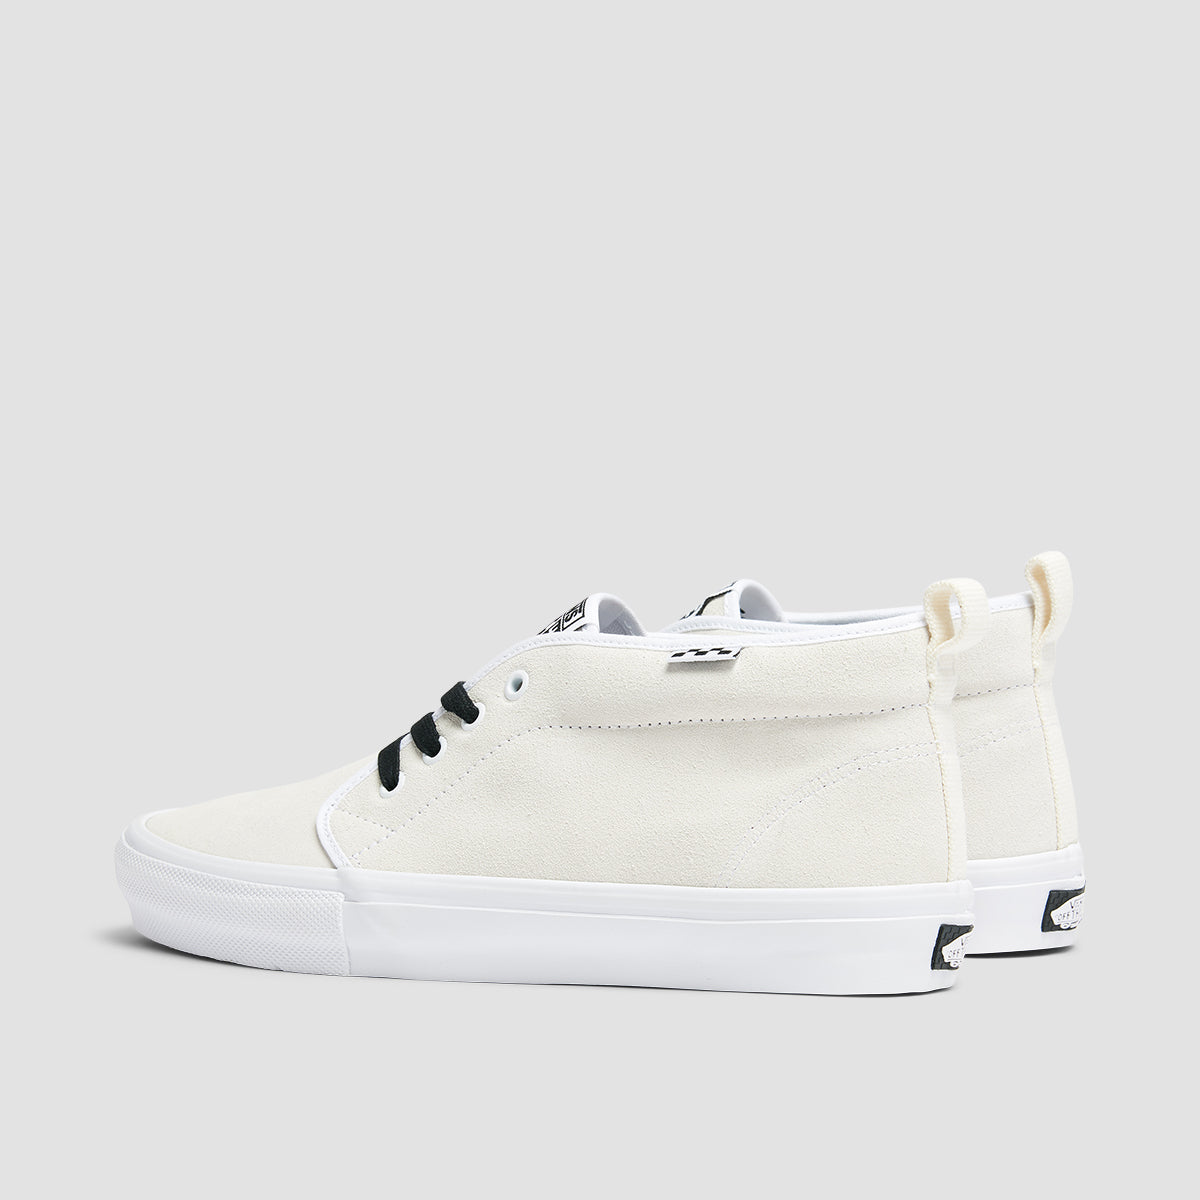 Vans Skate Chukka VCU Mid Top Shoes - Essential White